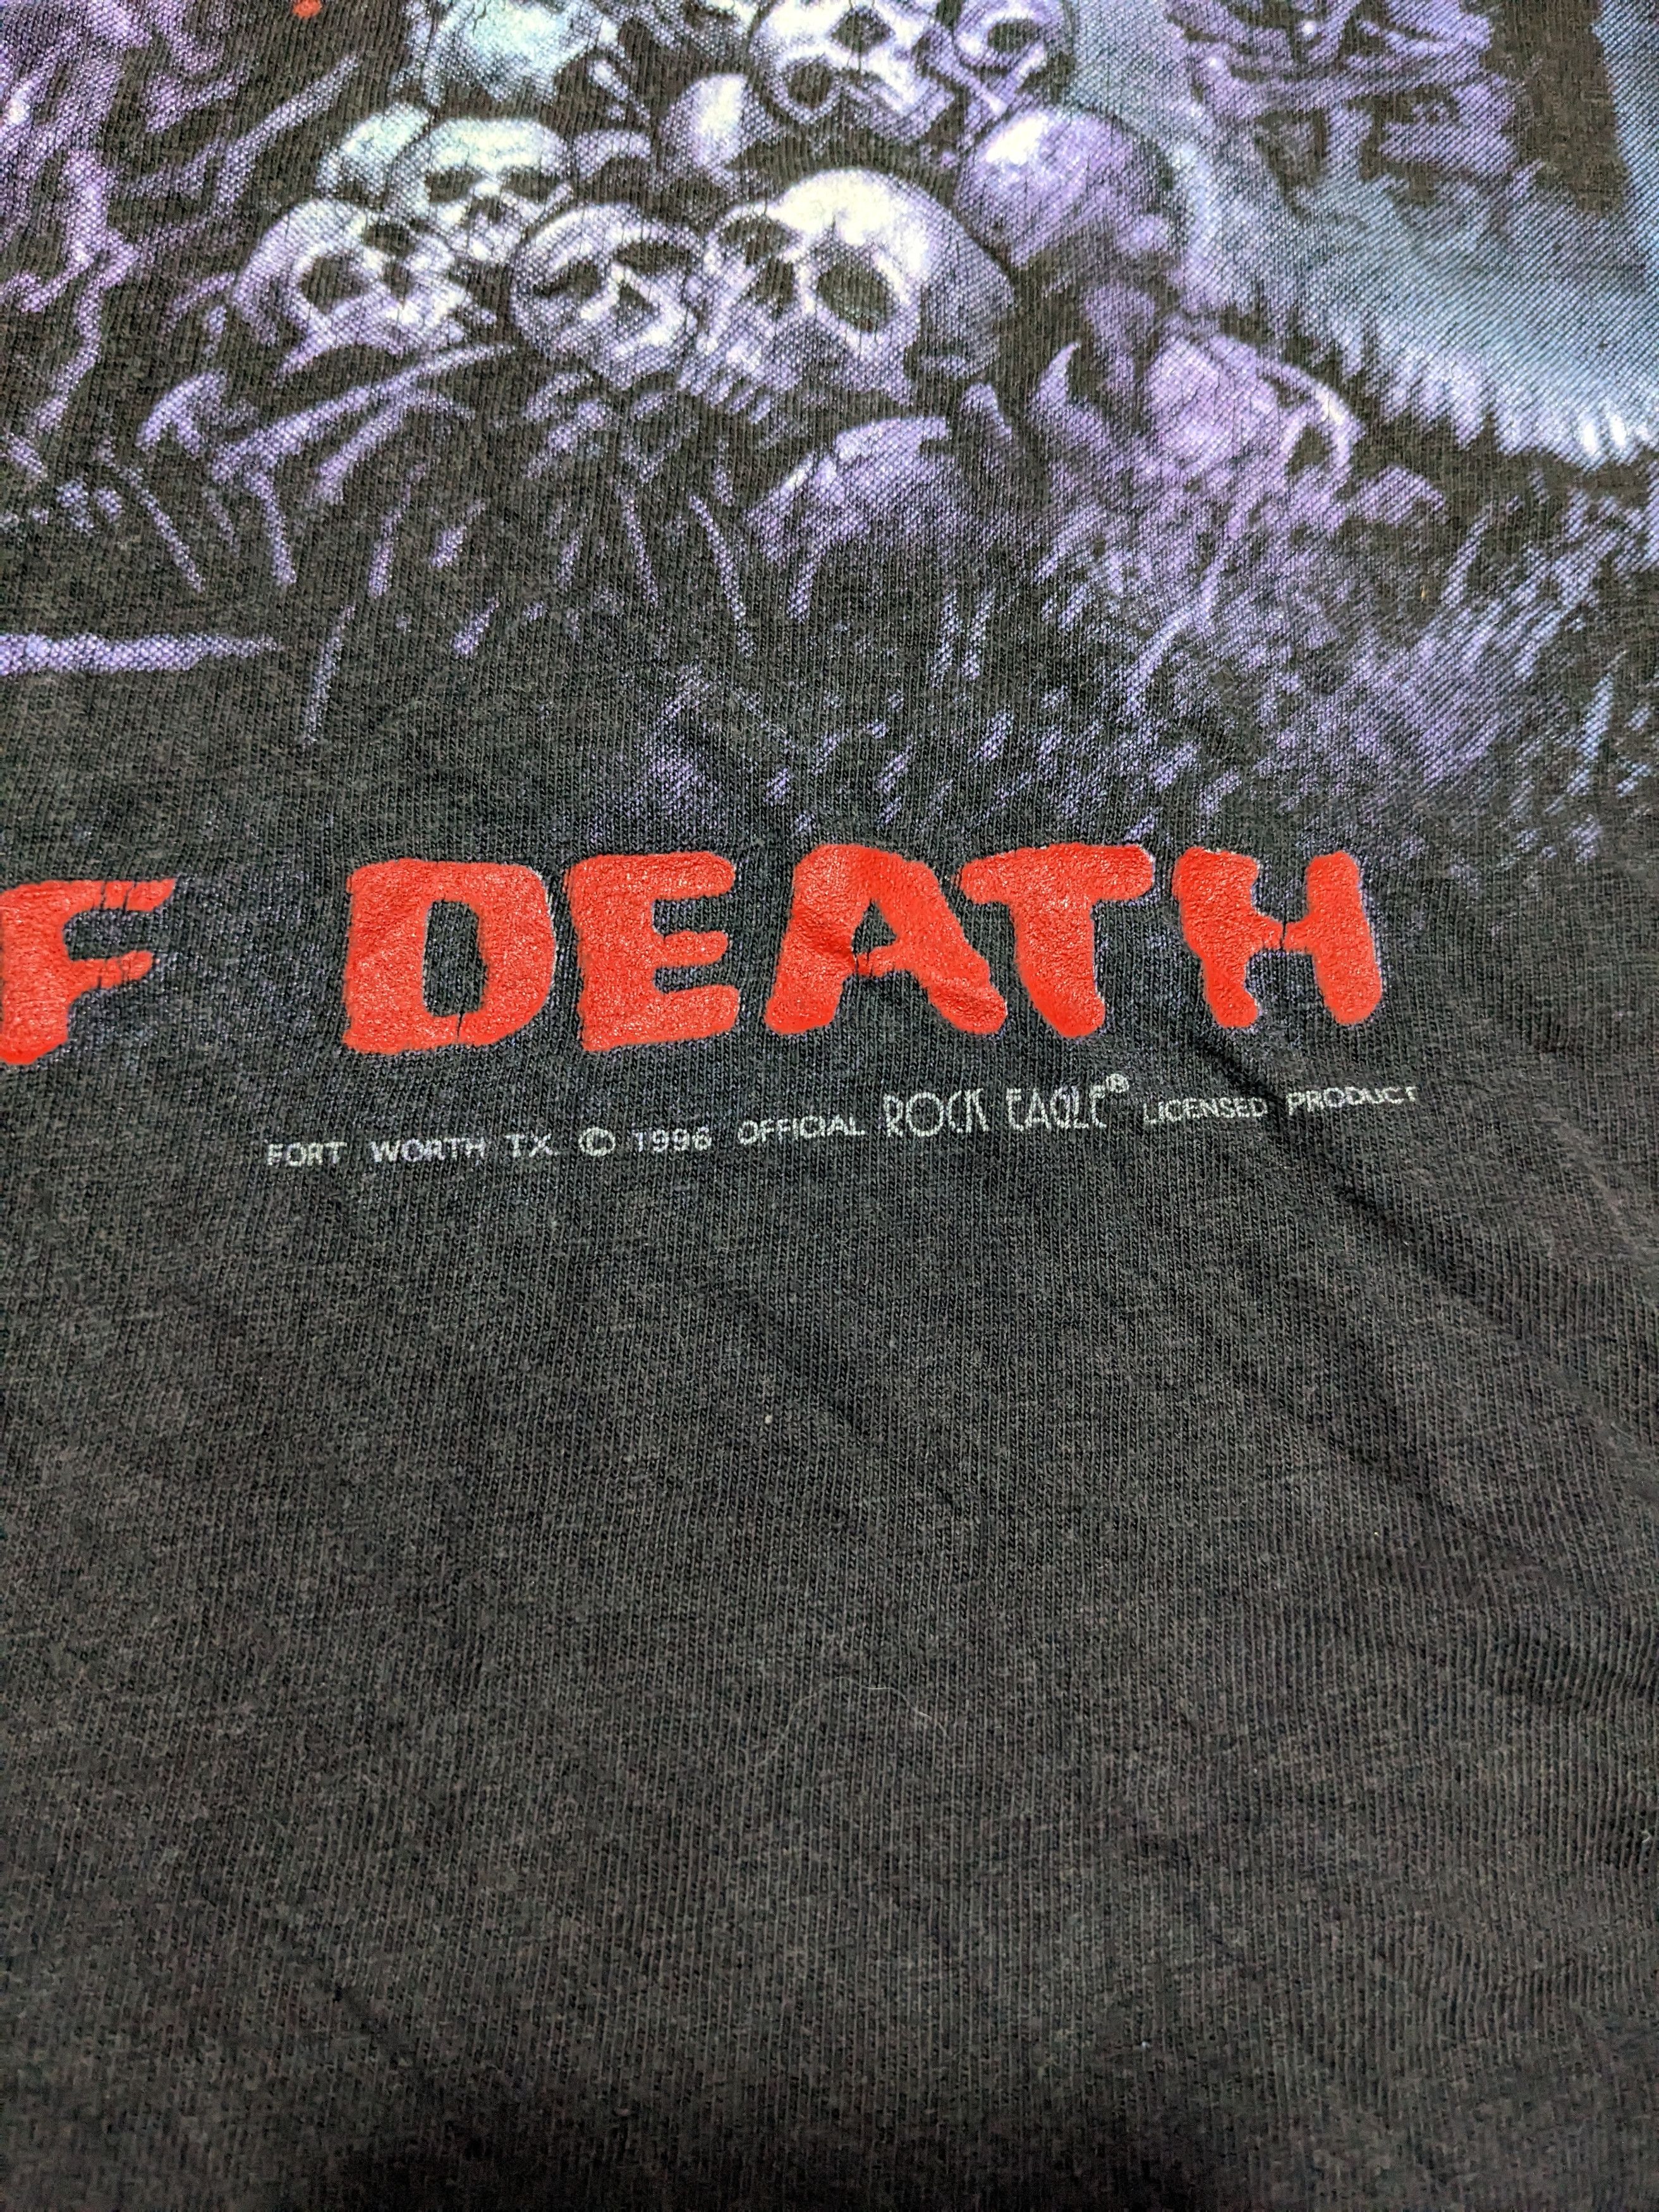 Rare Obituary Cause Of Death Bootleg Vintage T-Shirt - 2